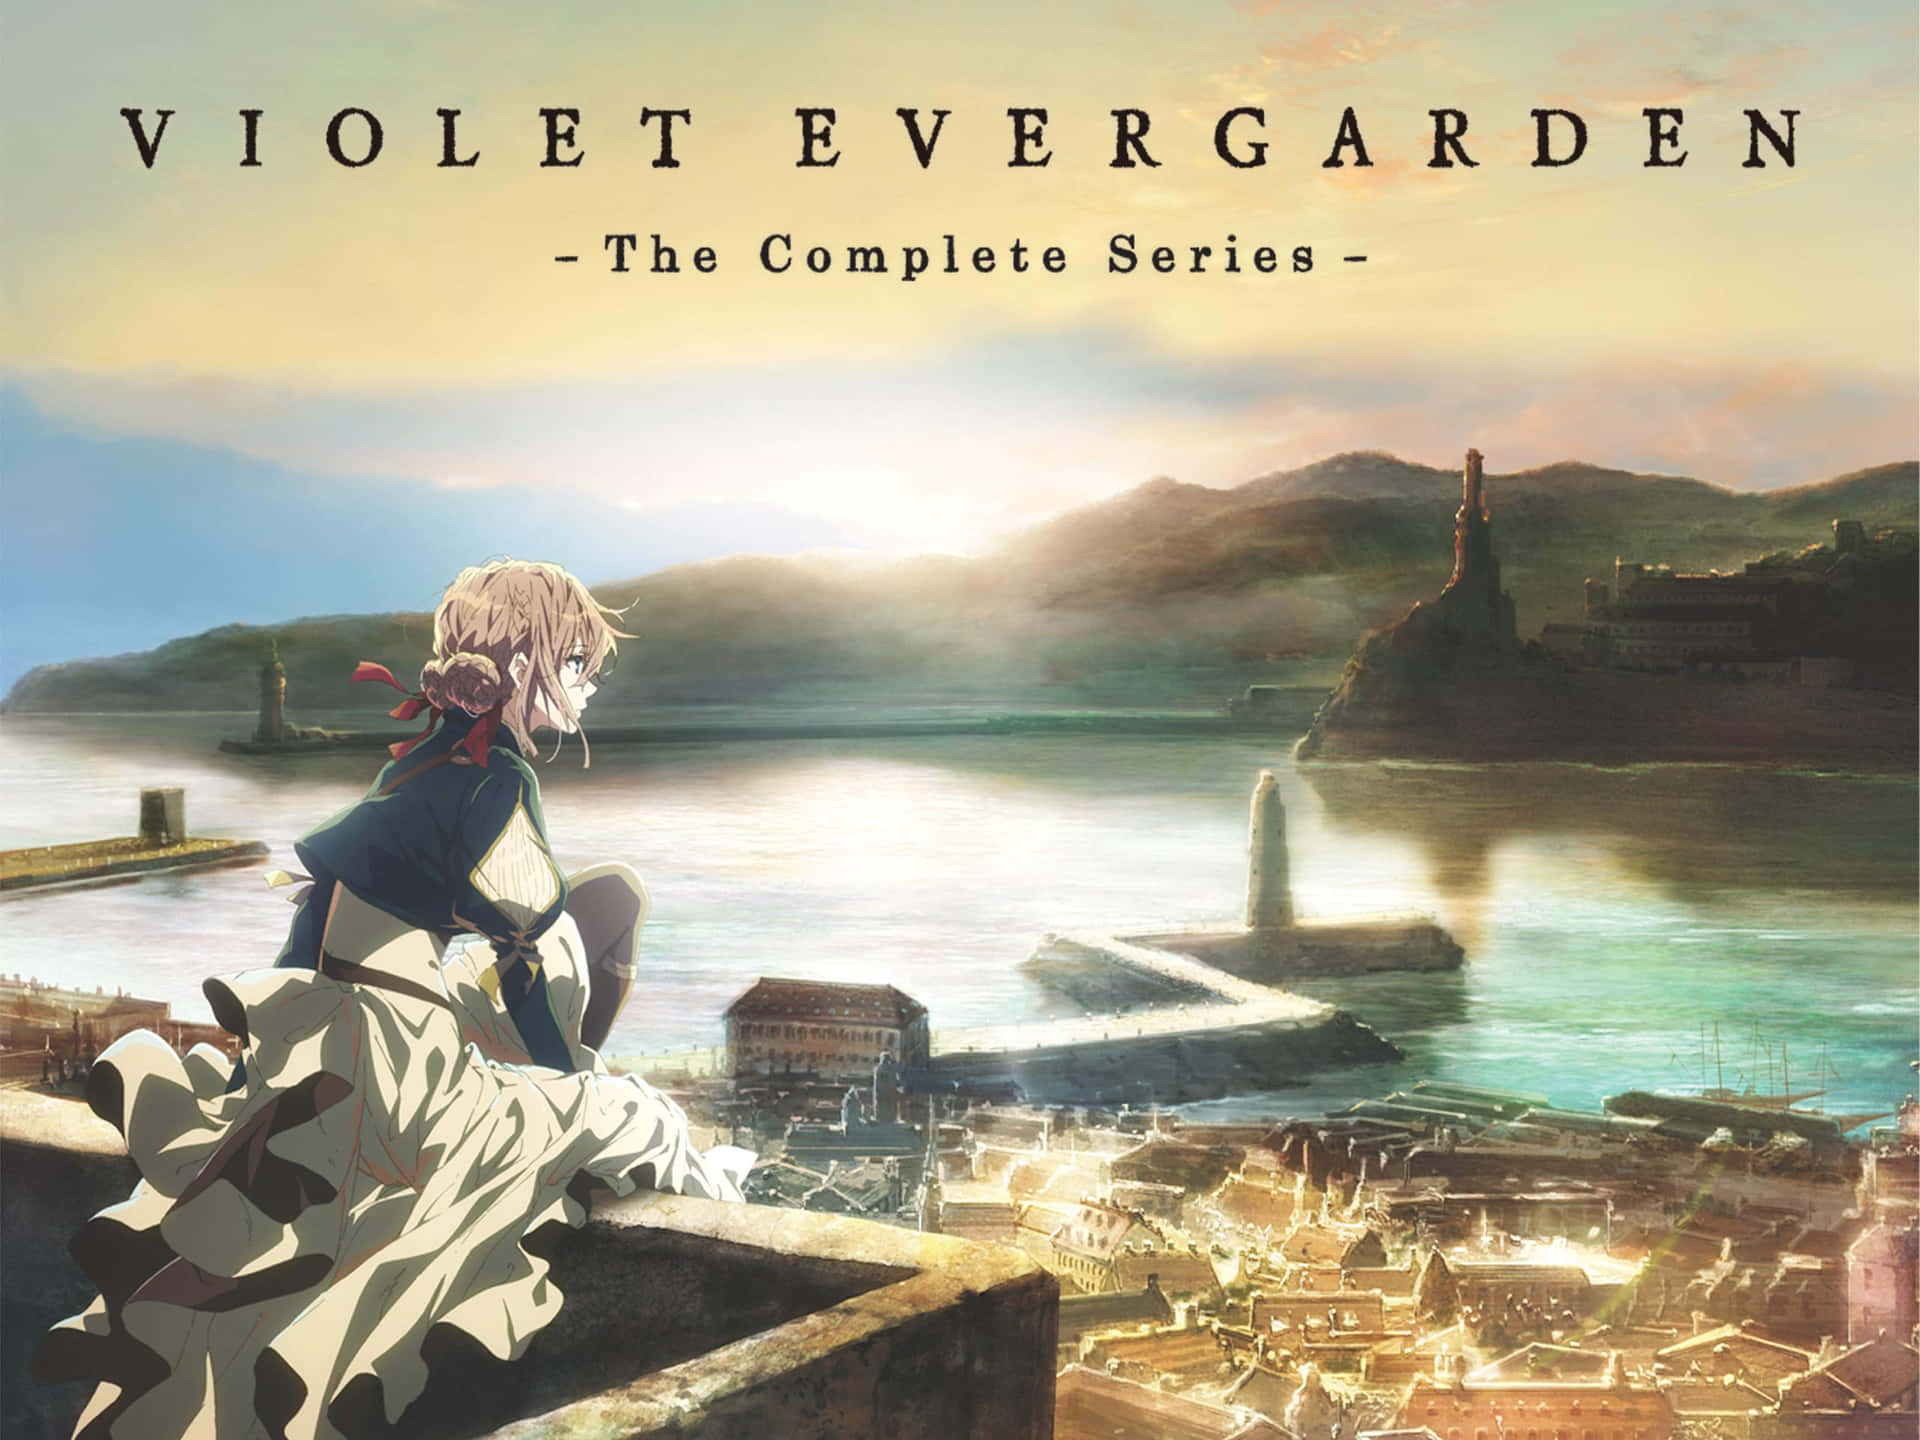 Violetevergarden-serien Affischbild.